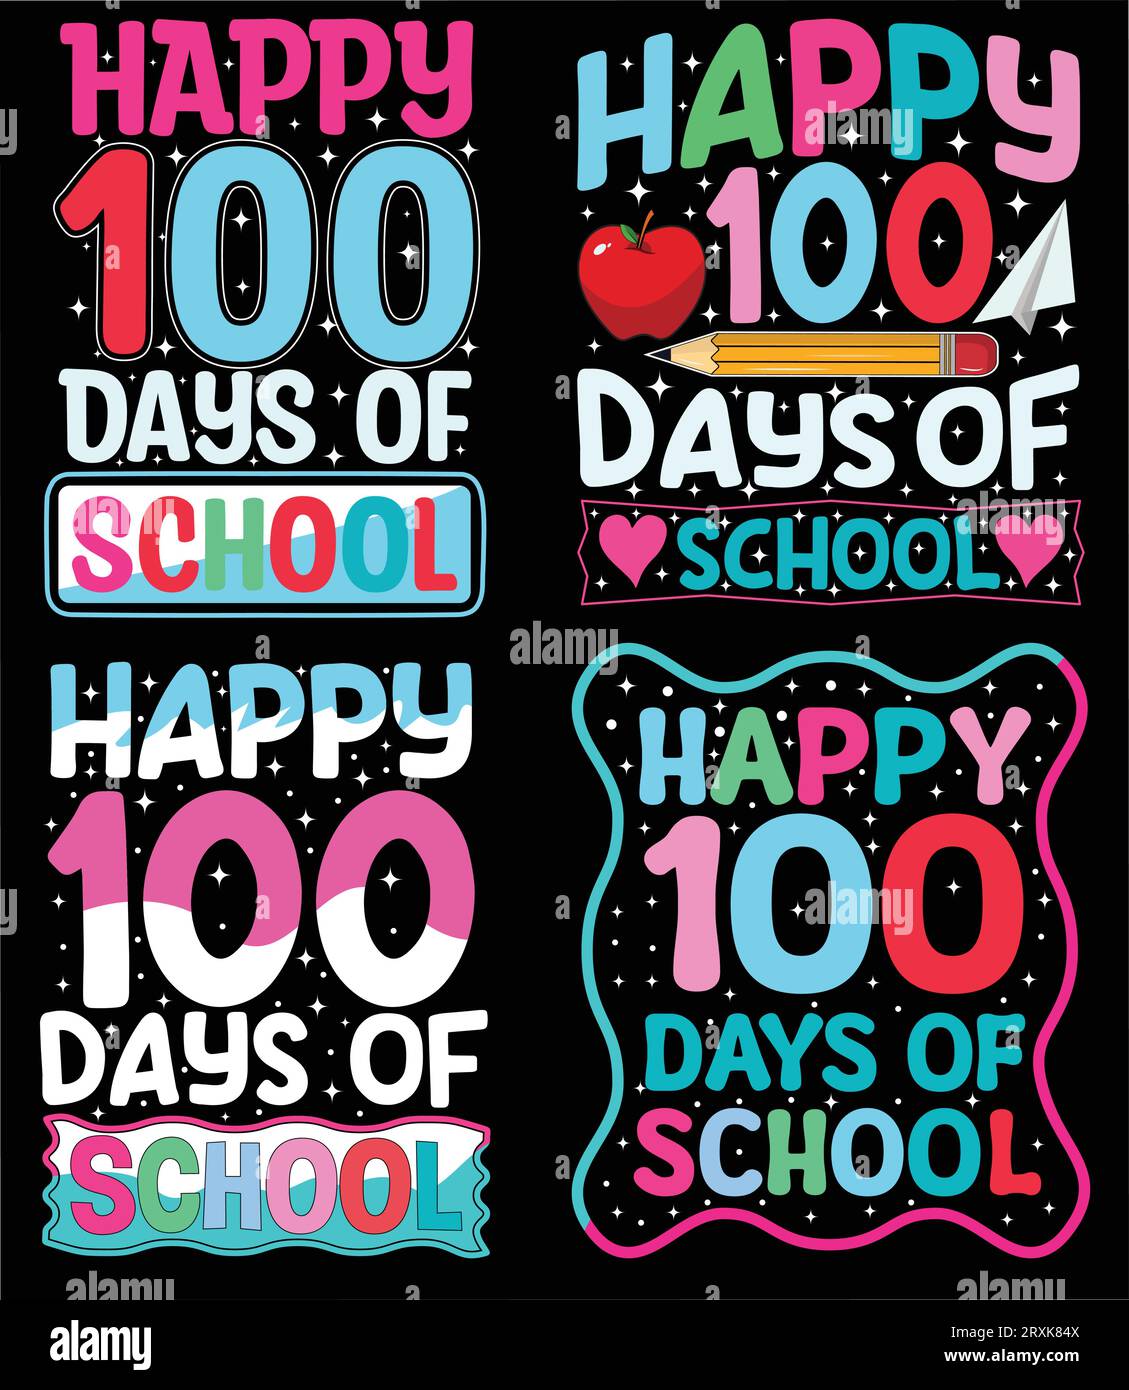 100 DAY OF SCHOOL T SHIRT DESIGN Stock Vector